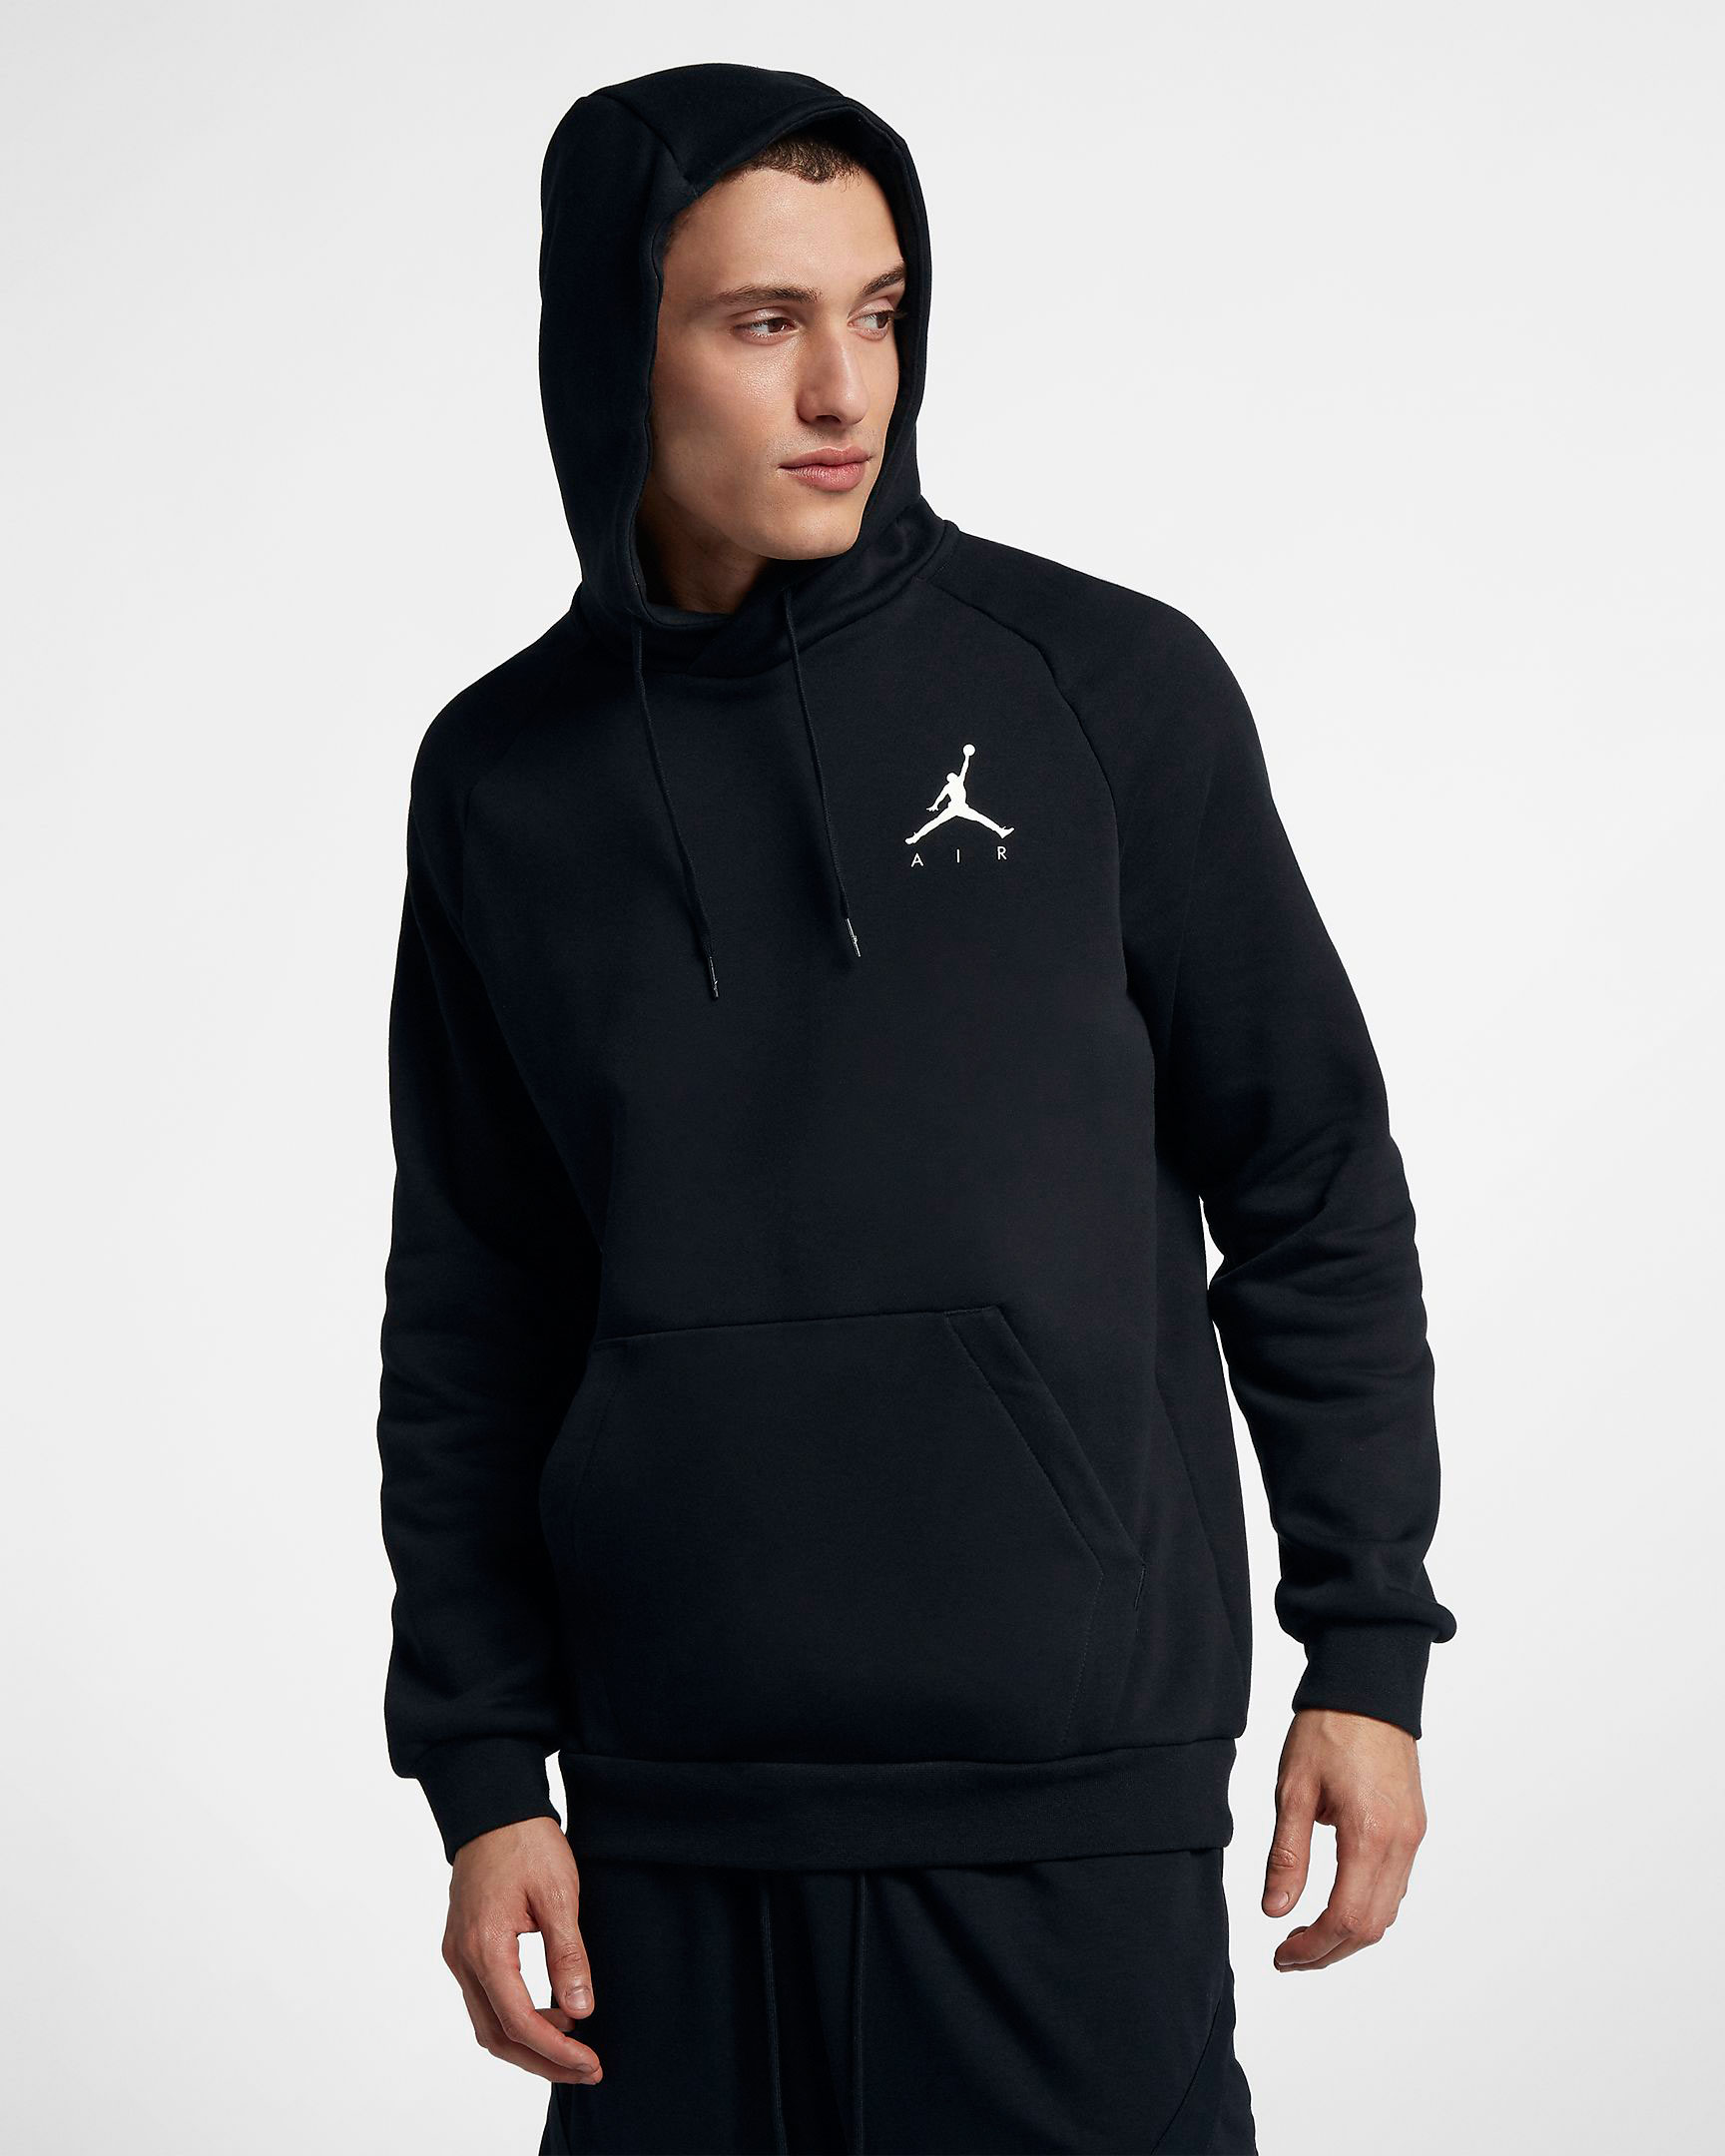 Air Jordan 4 Winter Clothing and Hat Match | SneakerFits.com